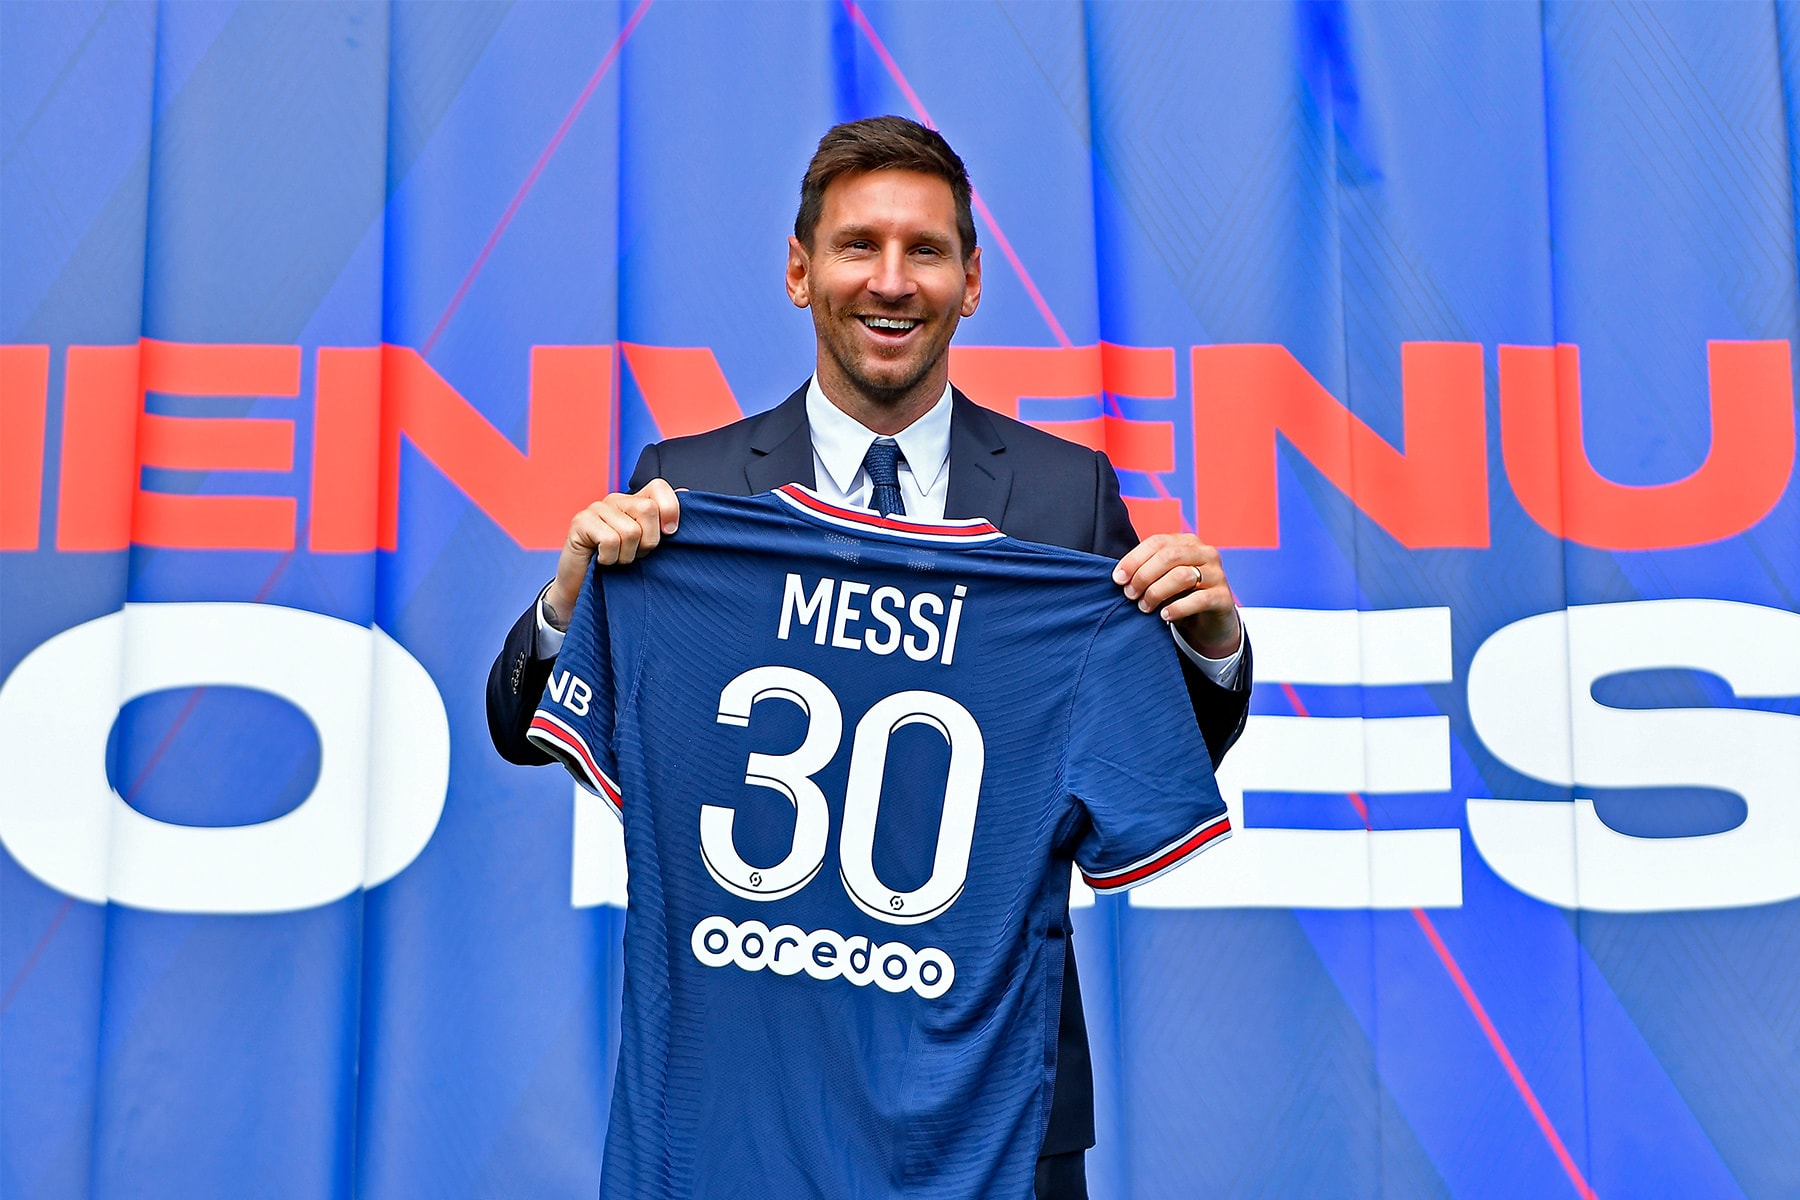 Lionel Messi 轉會首日球衣銷售額即達到 $1.05 億美元